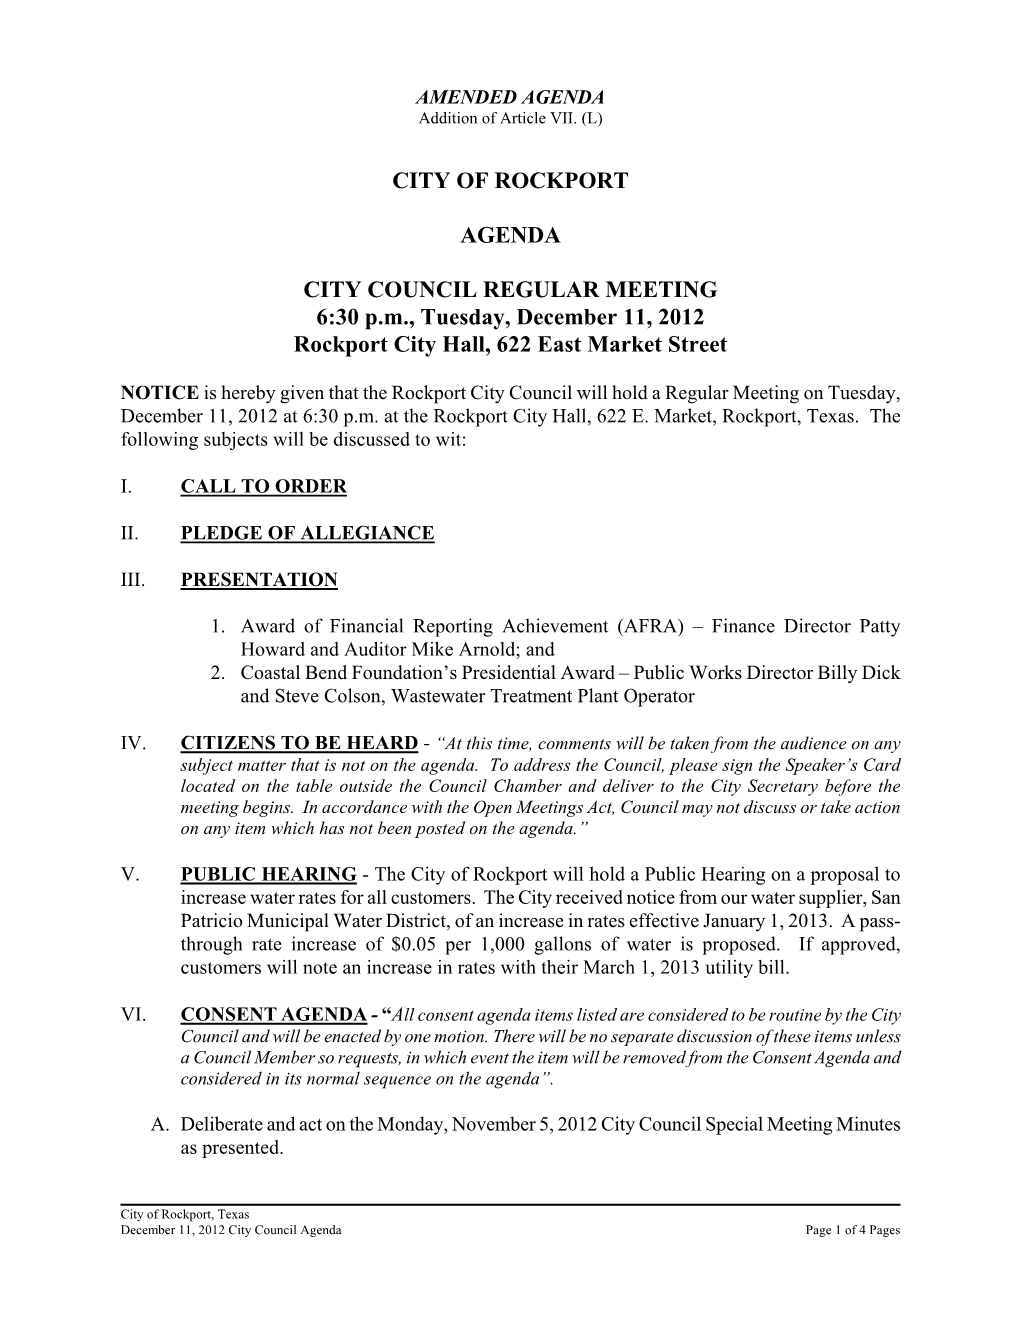 City of Rockport Agenda City Council Regular Meeting 6